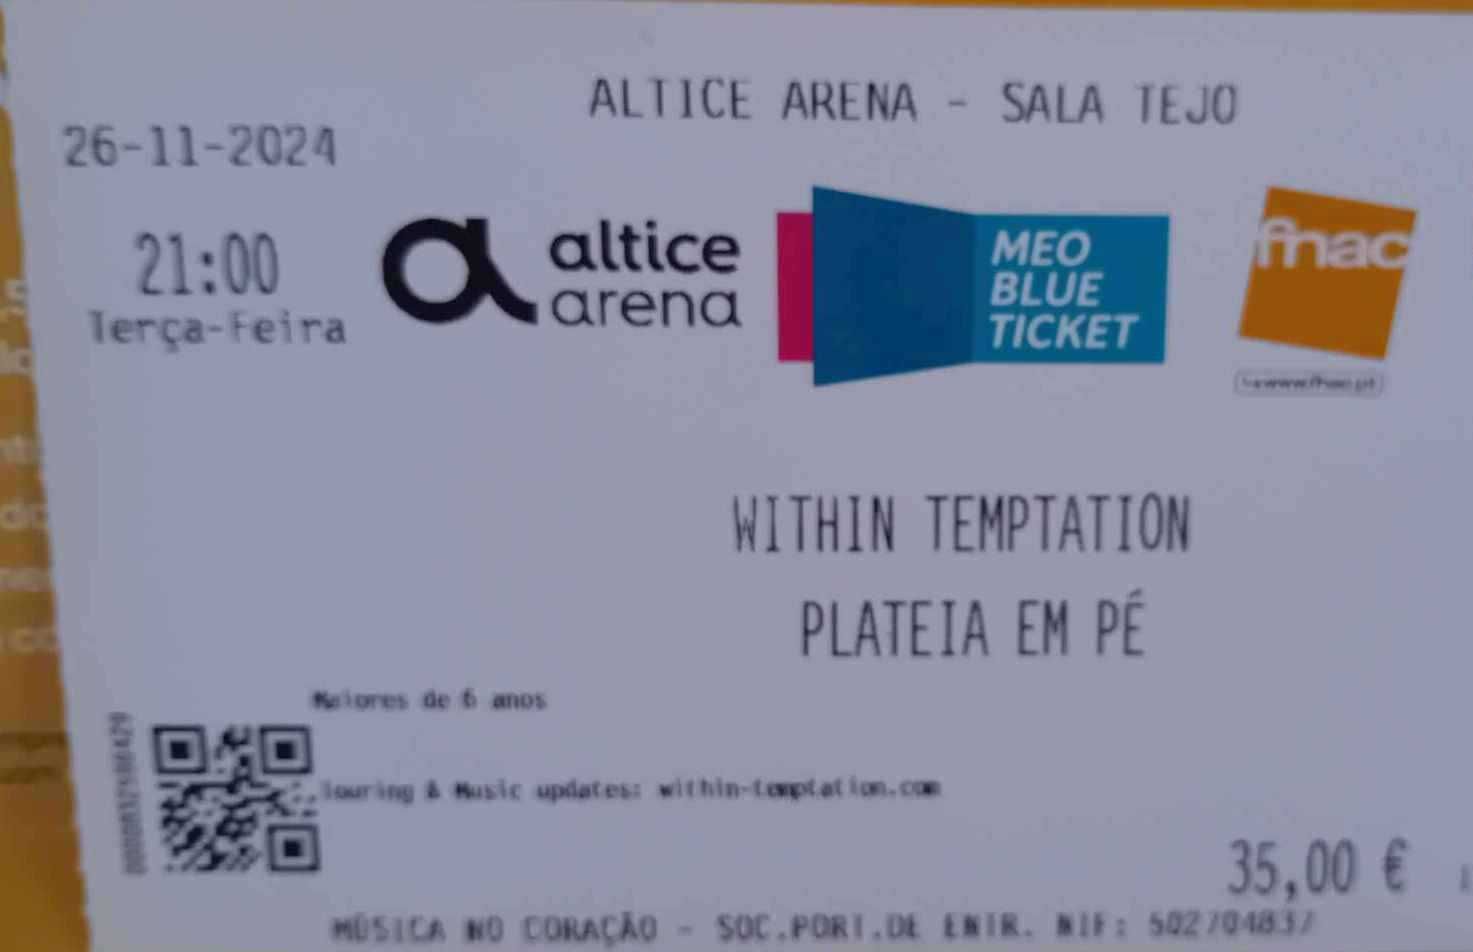 Bilhete concerto Within Temptation - Altice arena (26/11/24)